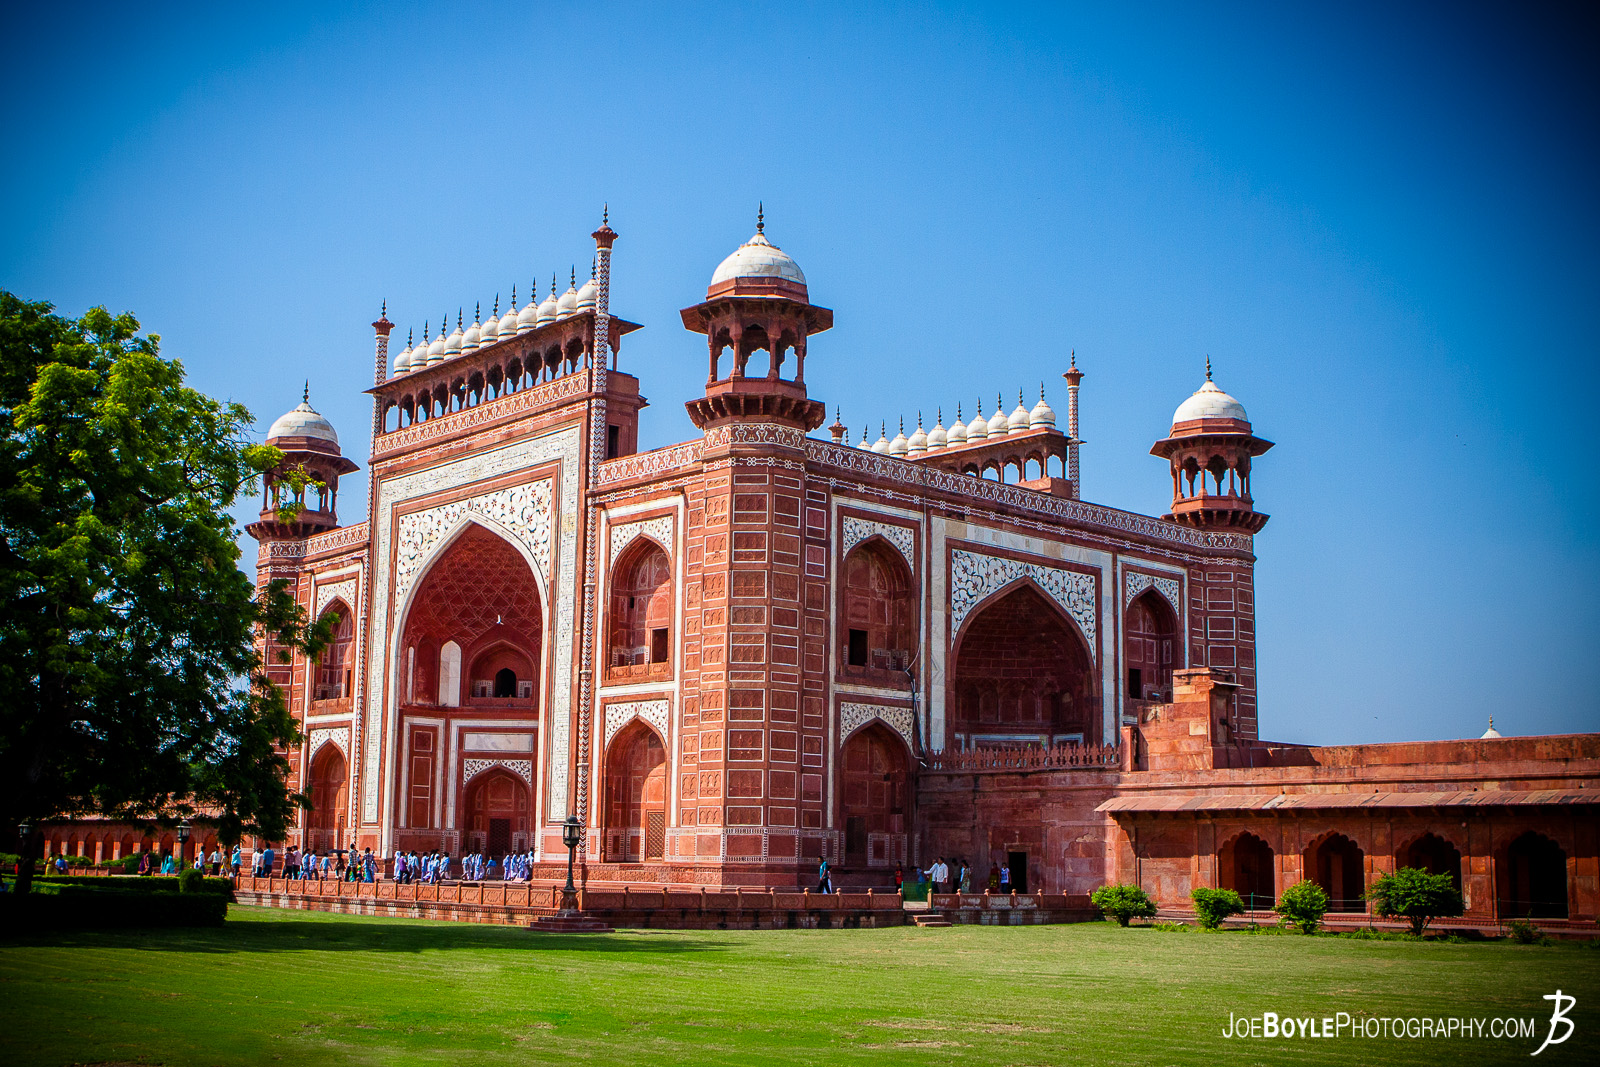 Buy "Taj Mahal Garden Entrance" Photo - Print Options